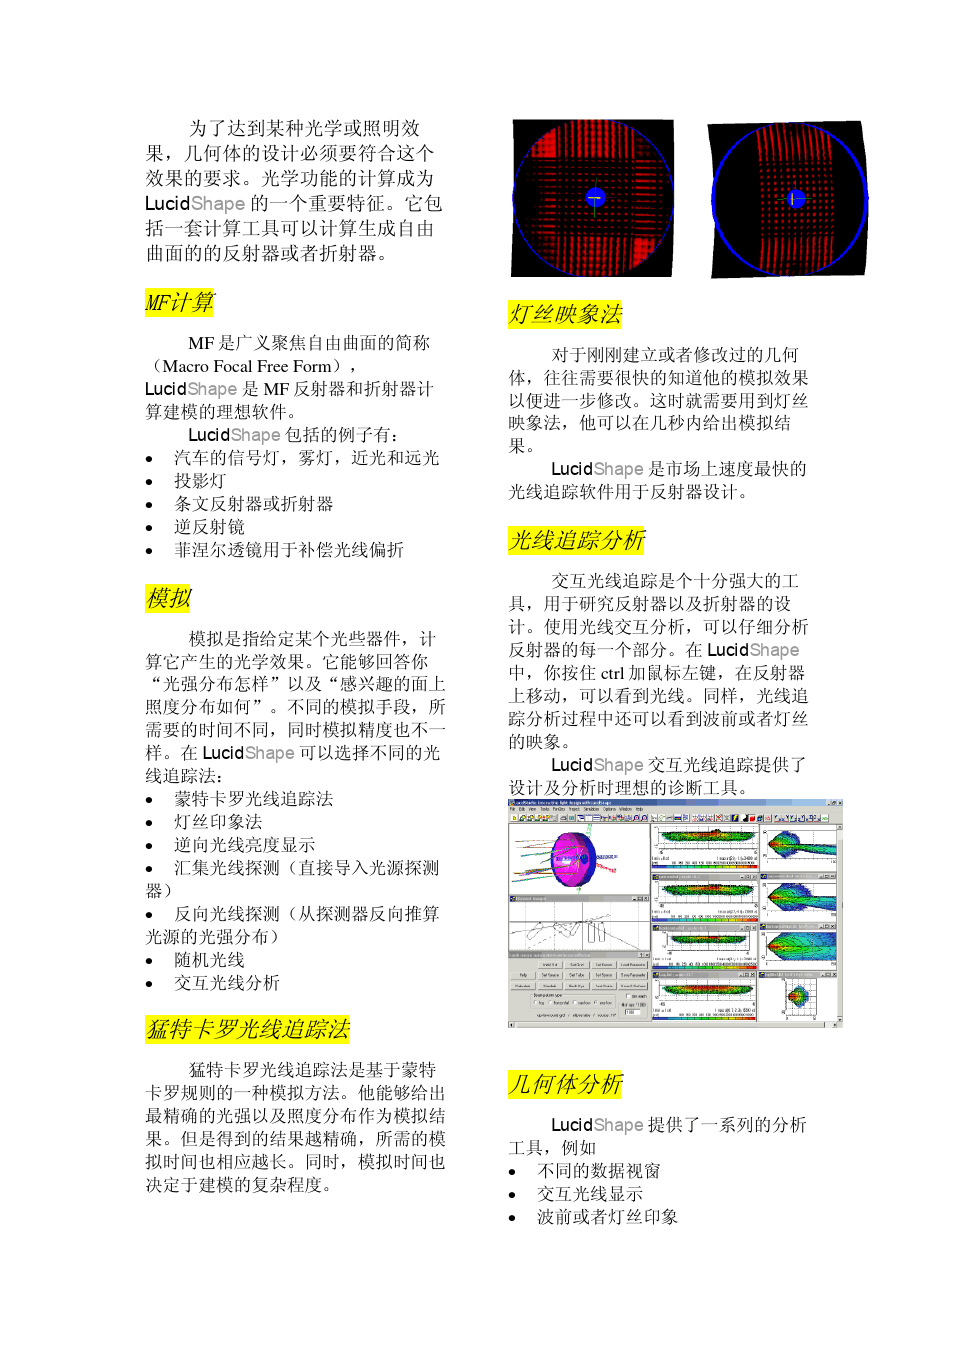 brochure_chinese  lucid shape